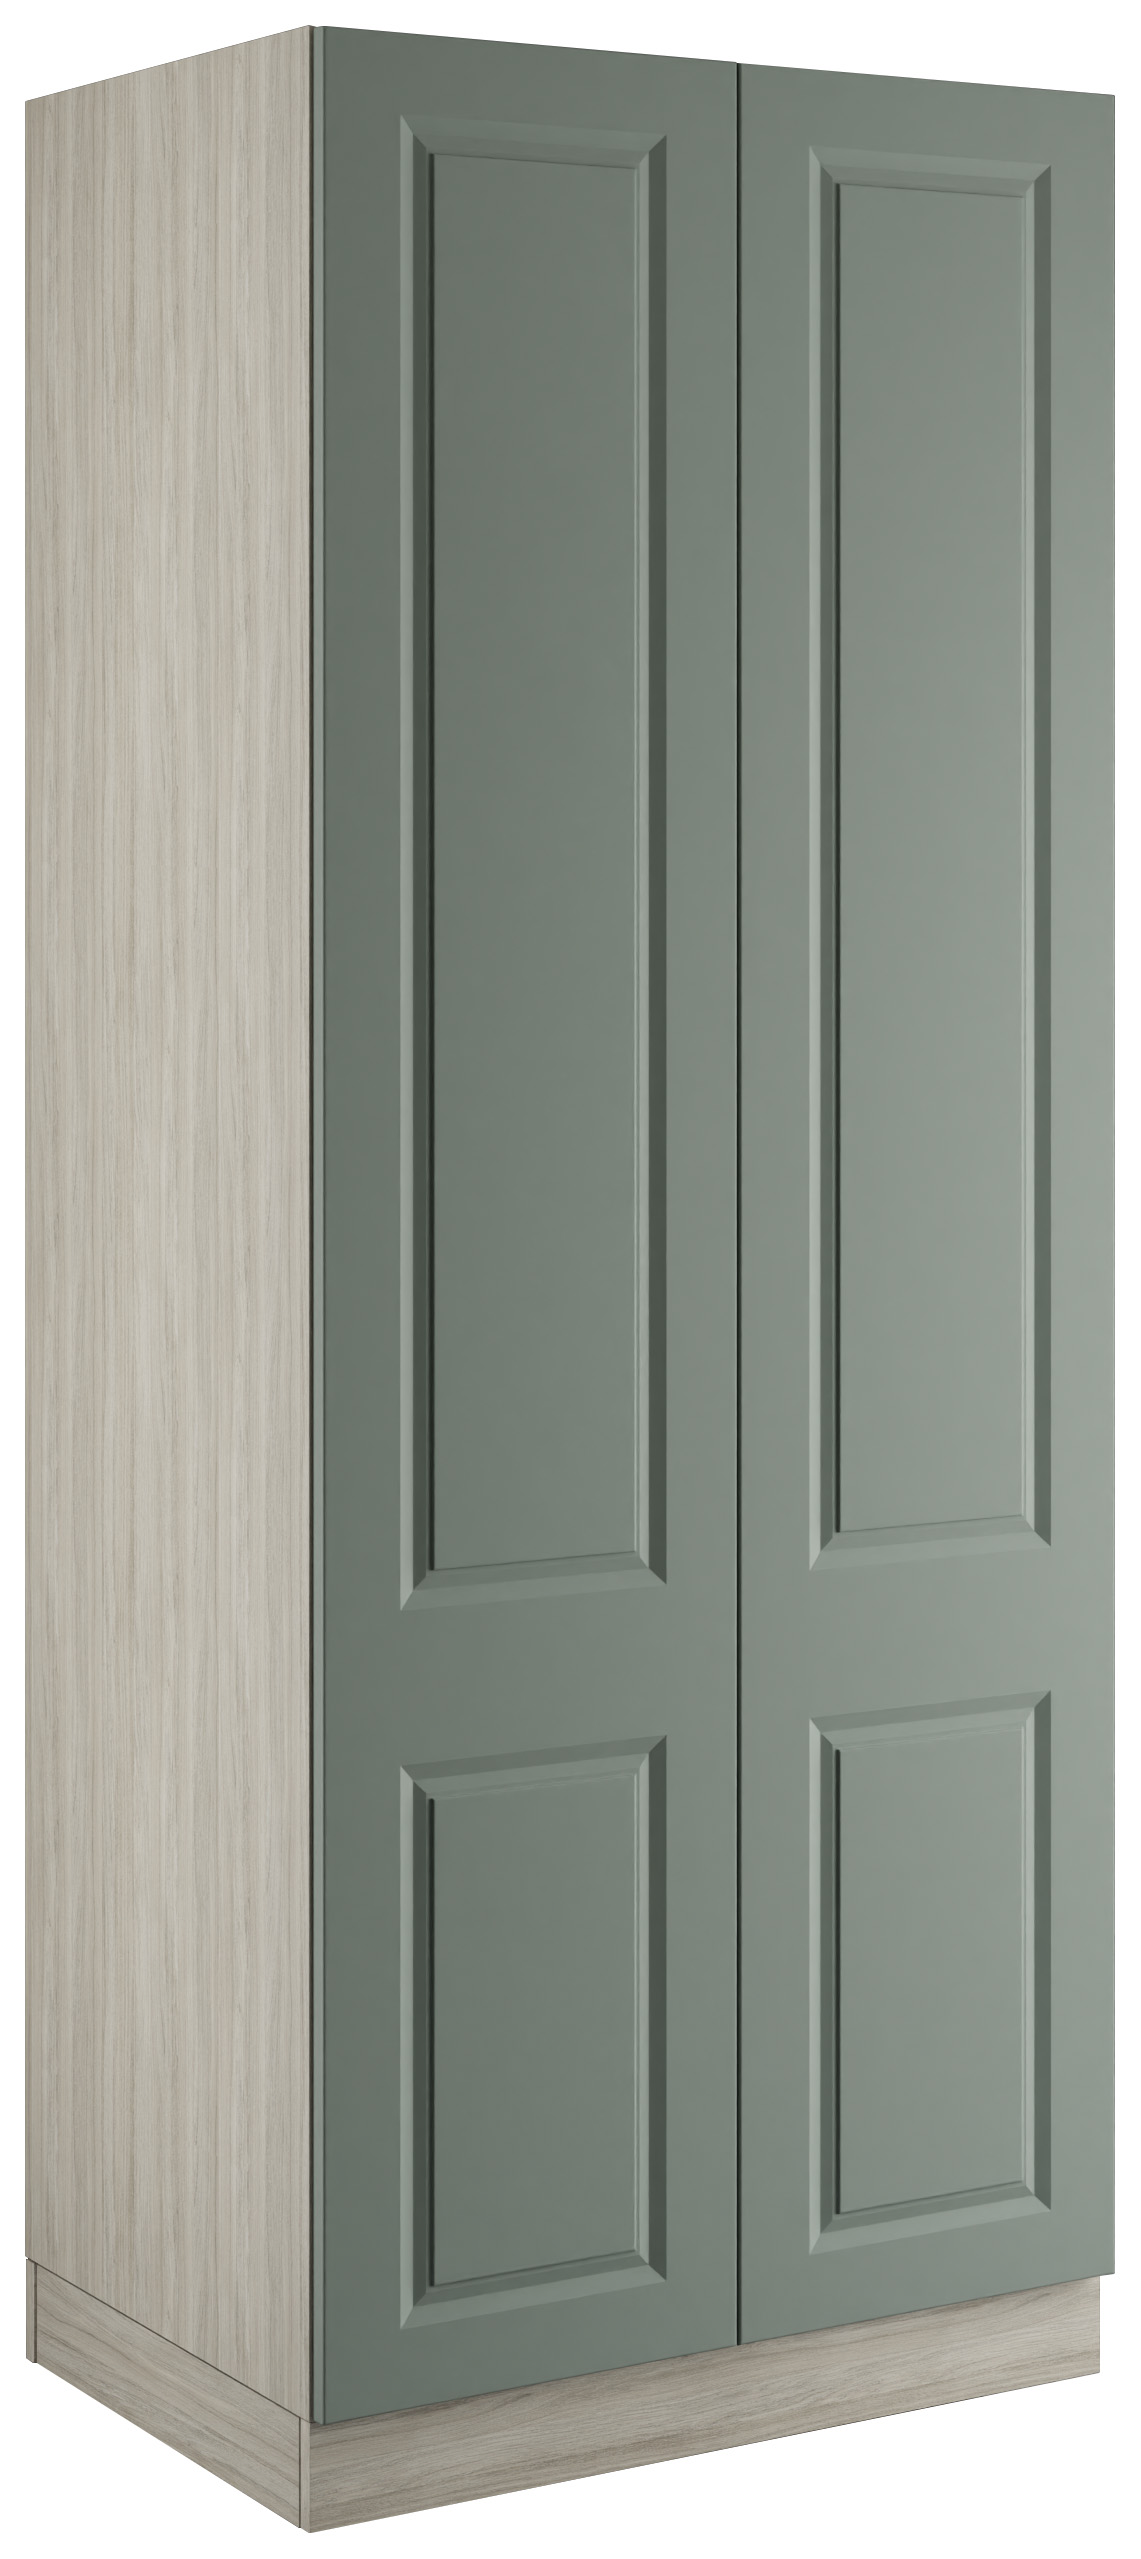 Harrogate Sage Green Double Wardrobe with Shelves - 900 x 2260 x 608mm